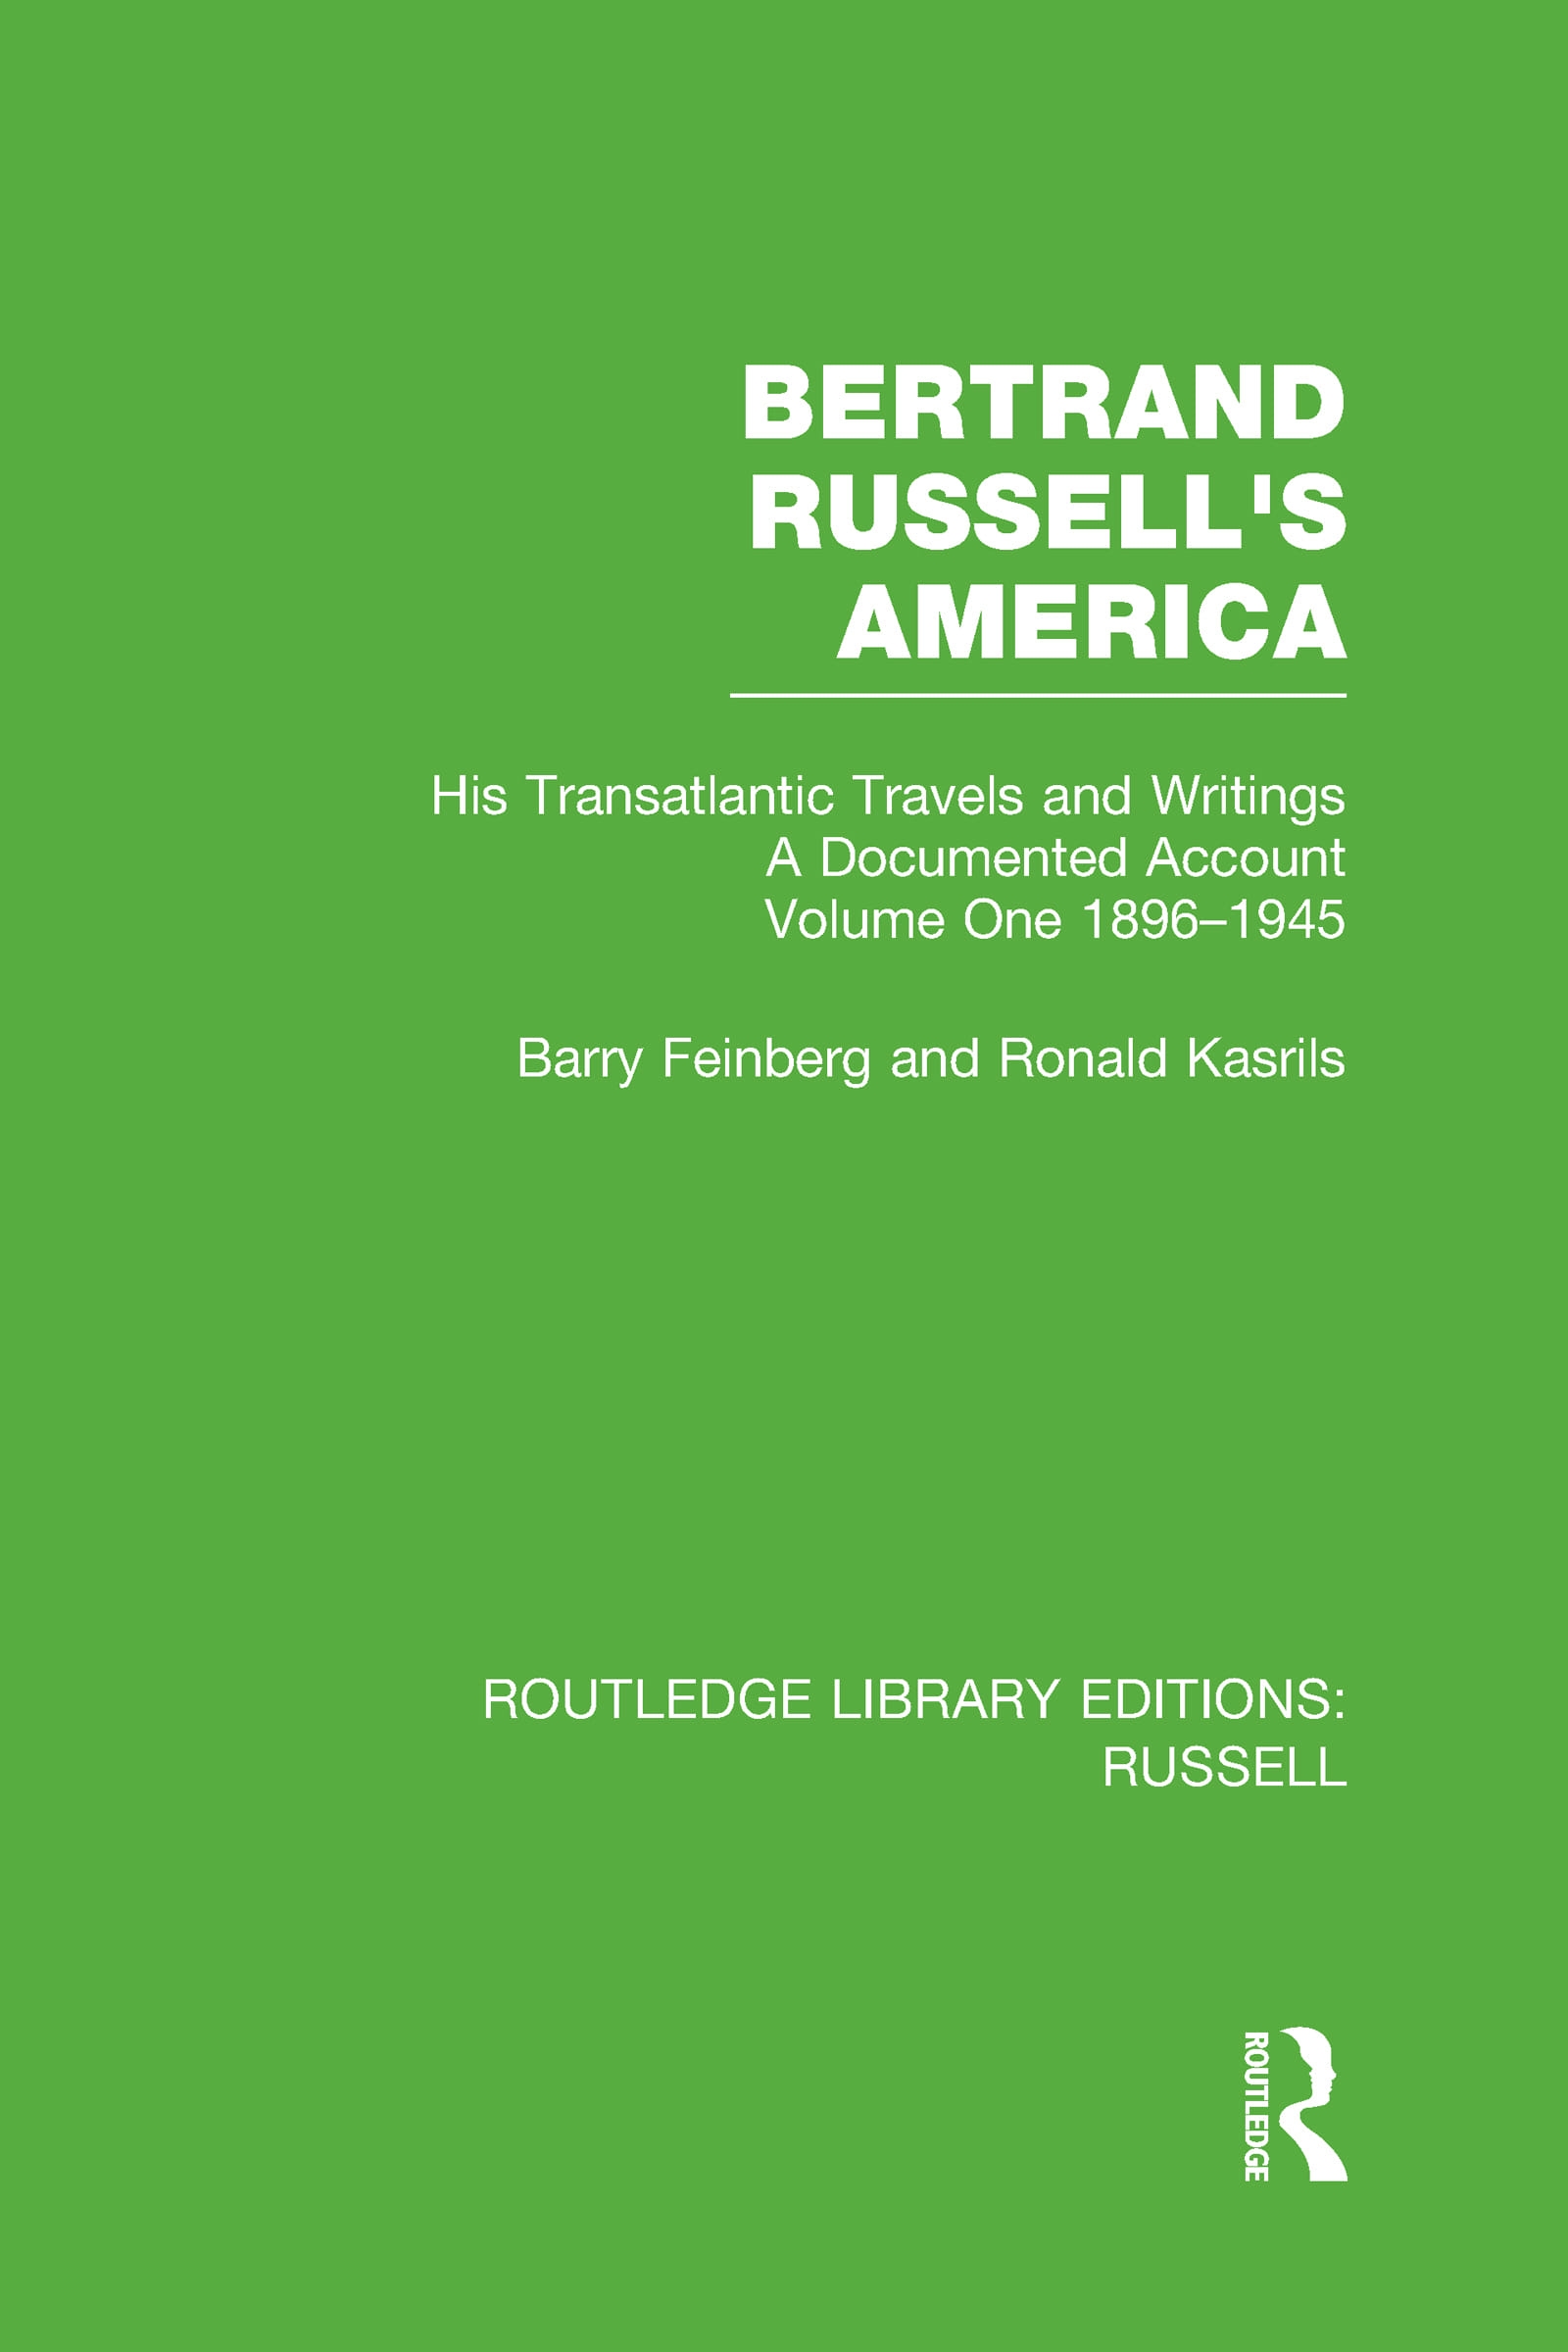 Bertrand Russell’s America: His Transatlantic Travels and Writings: 1896-1945